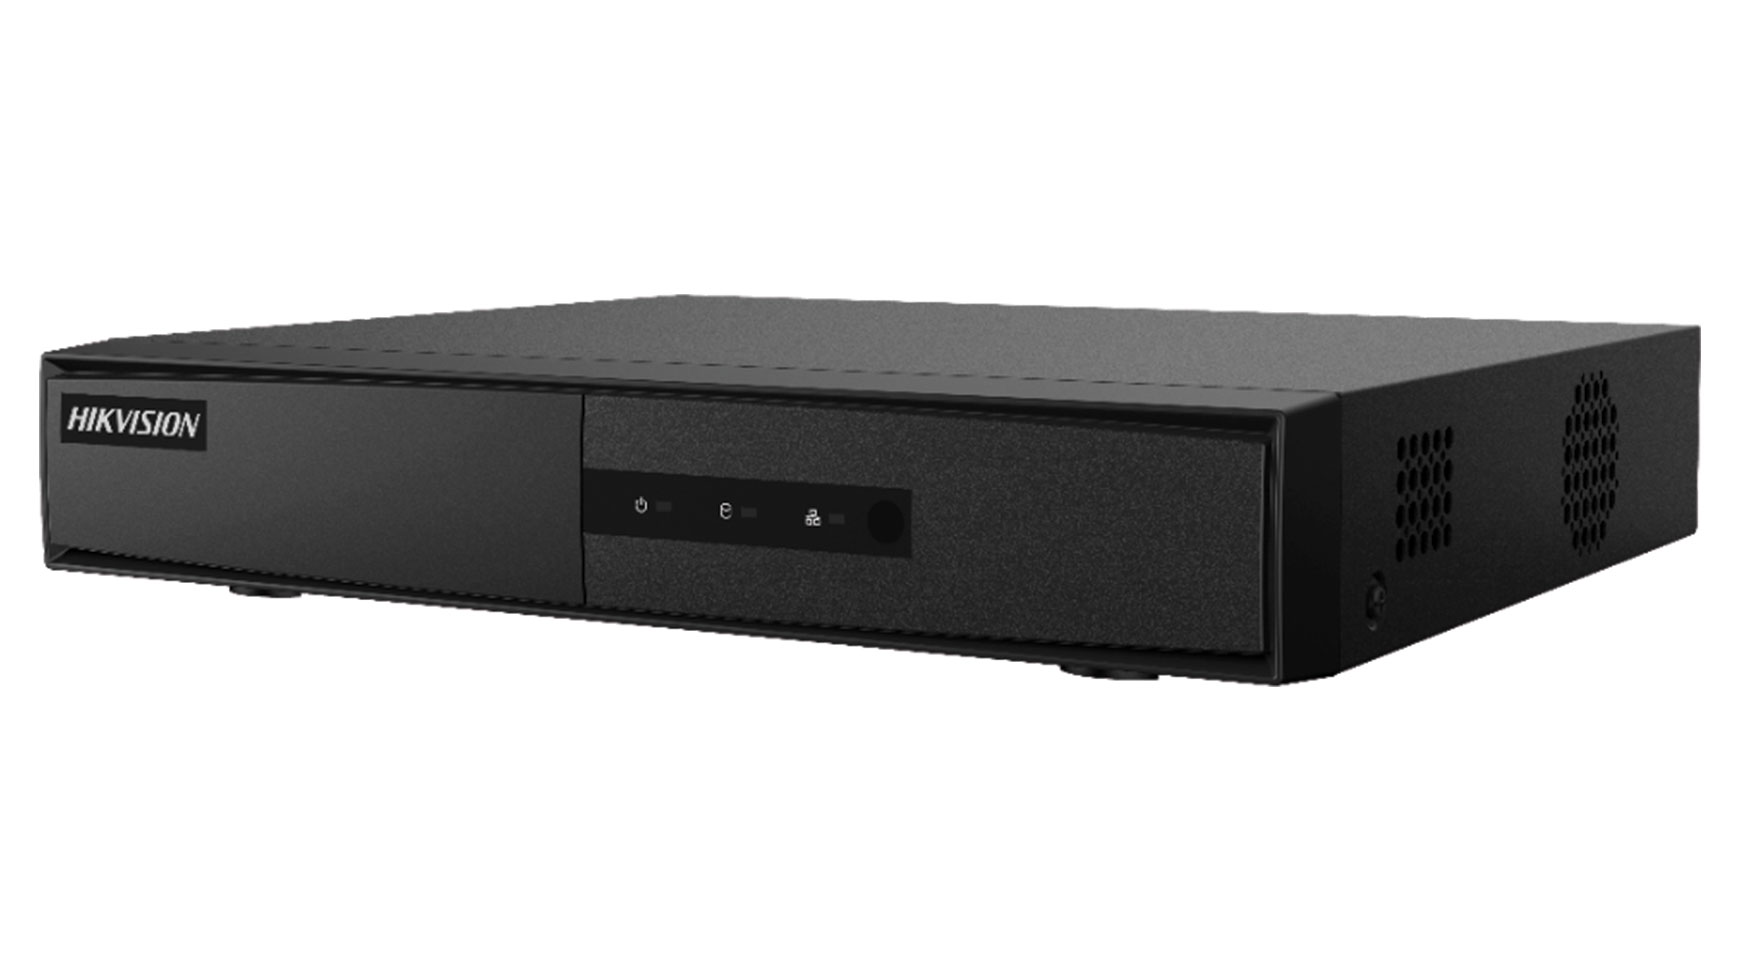 Hikvision DS-7216HGHI-F1 - Turbo HD video snimač sa 16 analogna kanala i 2 dodatna IP kanala do rezolucije 1080p.